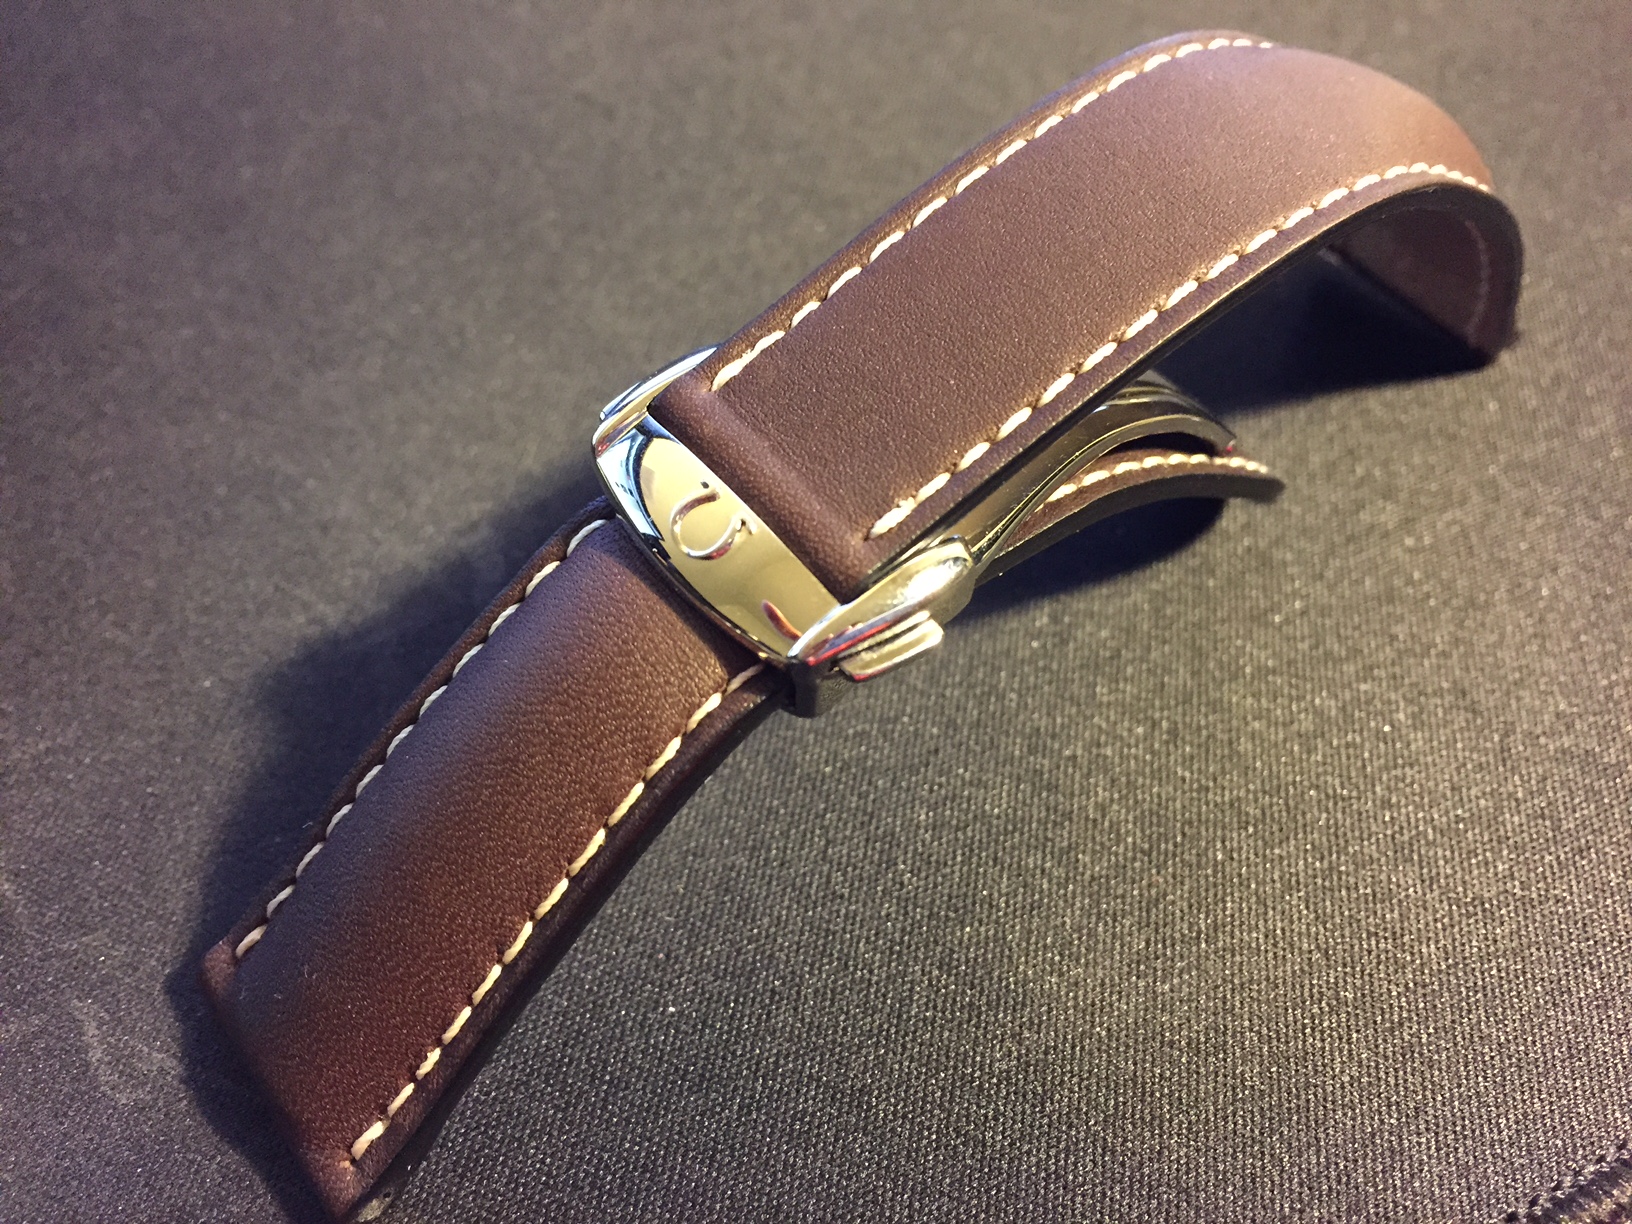 omega leather deployment strap